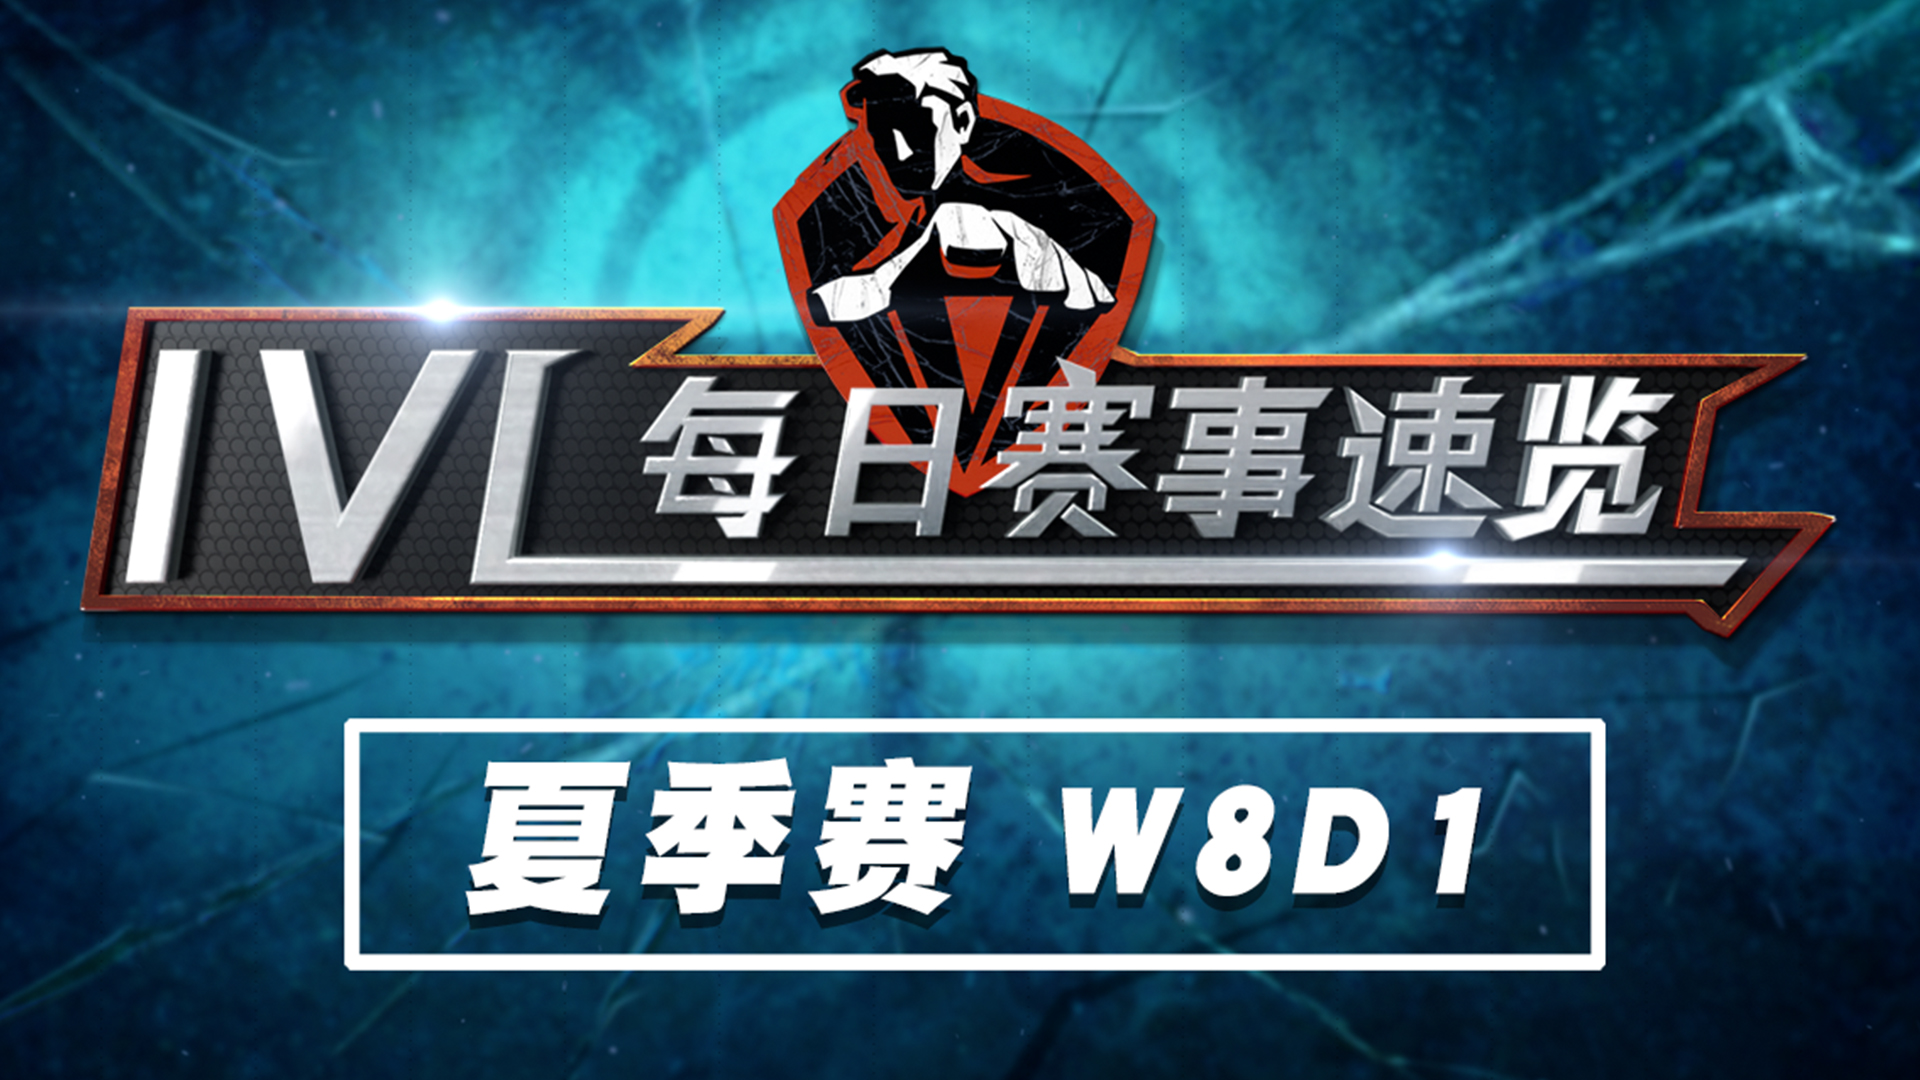 【2020IVL】夏季赛W8D1 赛事速览